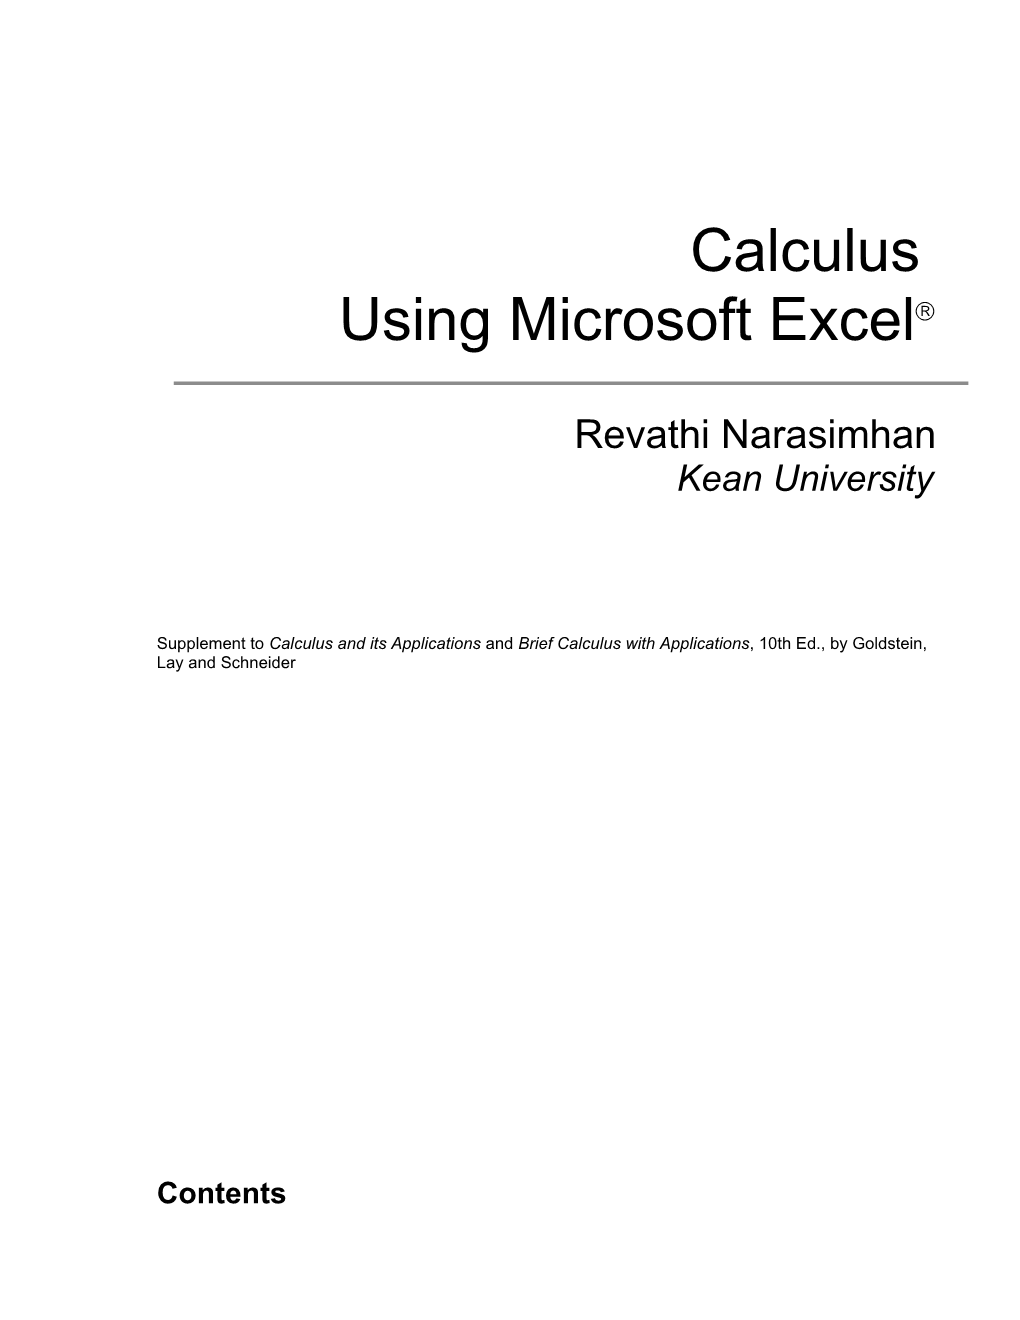 Using Microsoft Excelâ